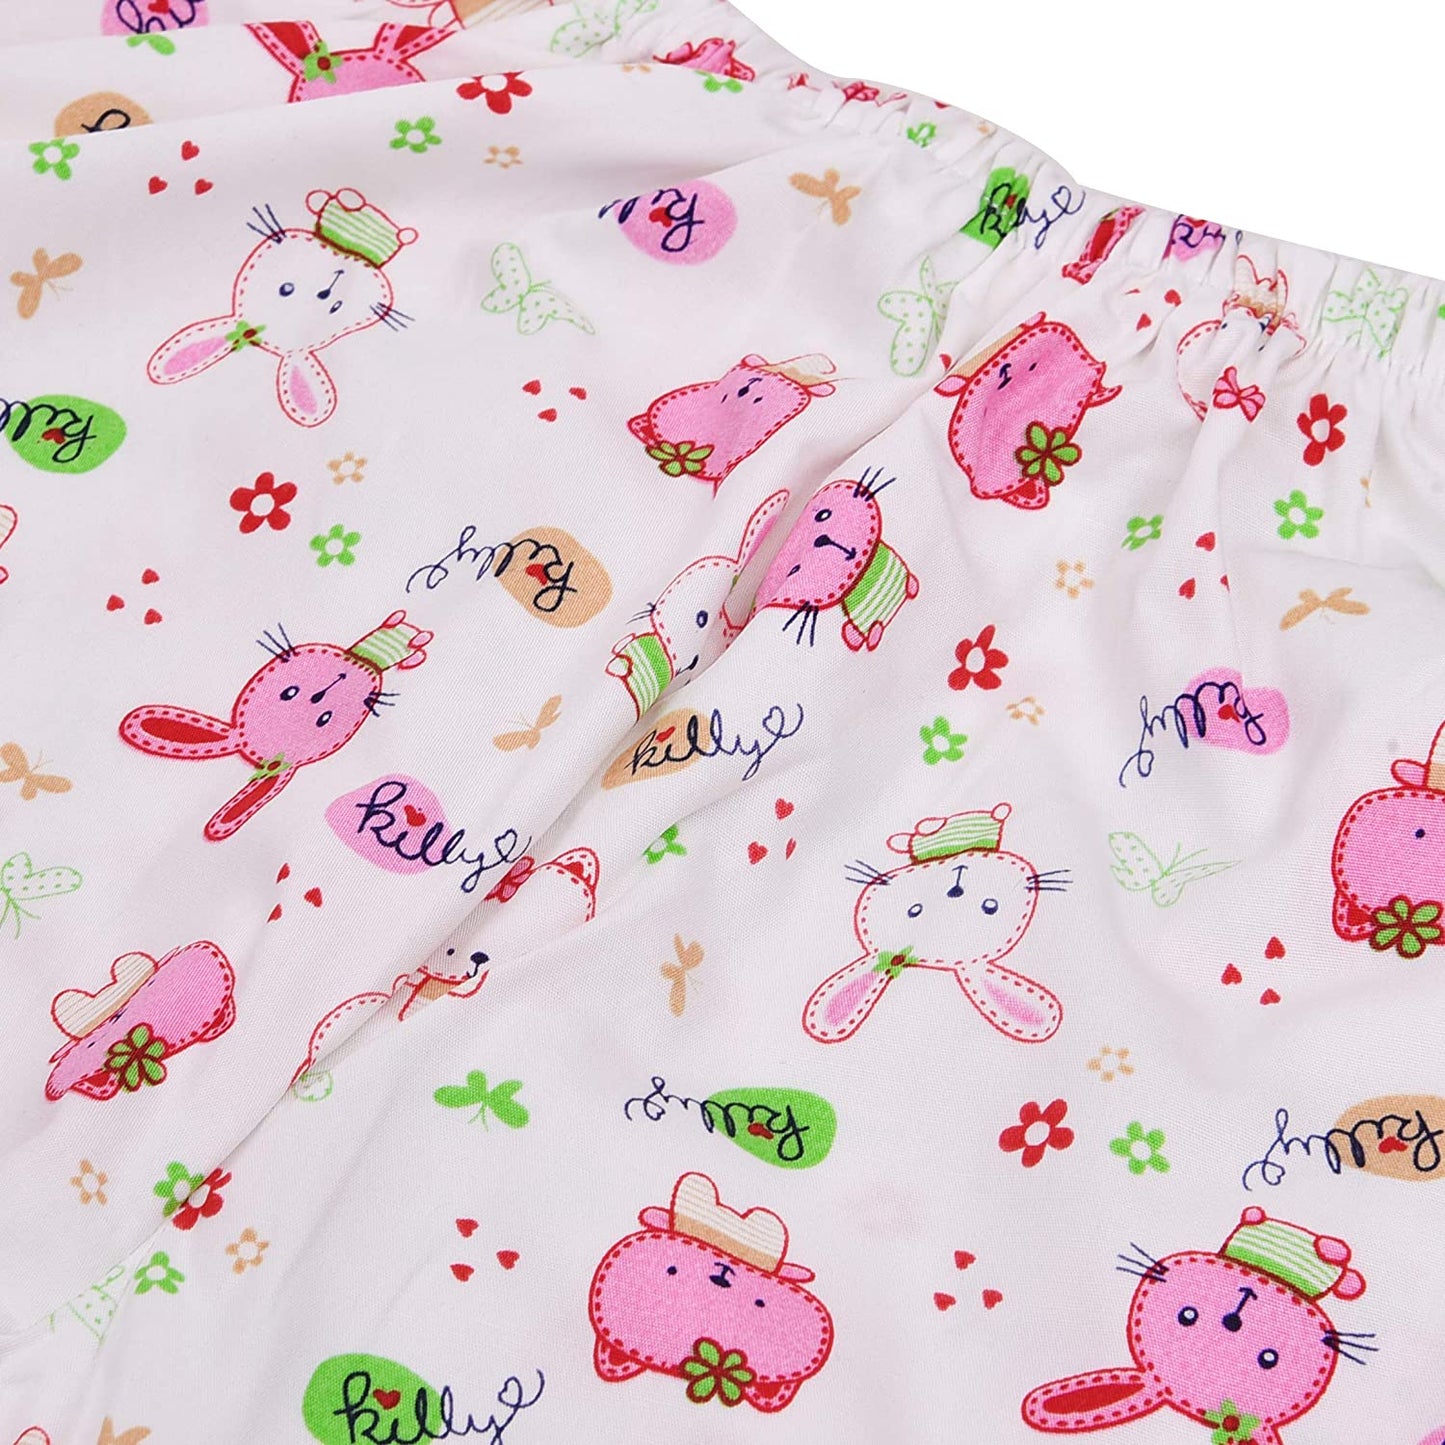 Wish Karo Cotton Nightdress for Baby Girls & Girls Payjama Set(ND02pnk)